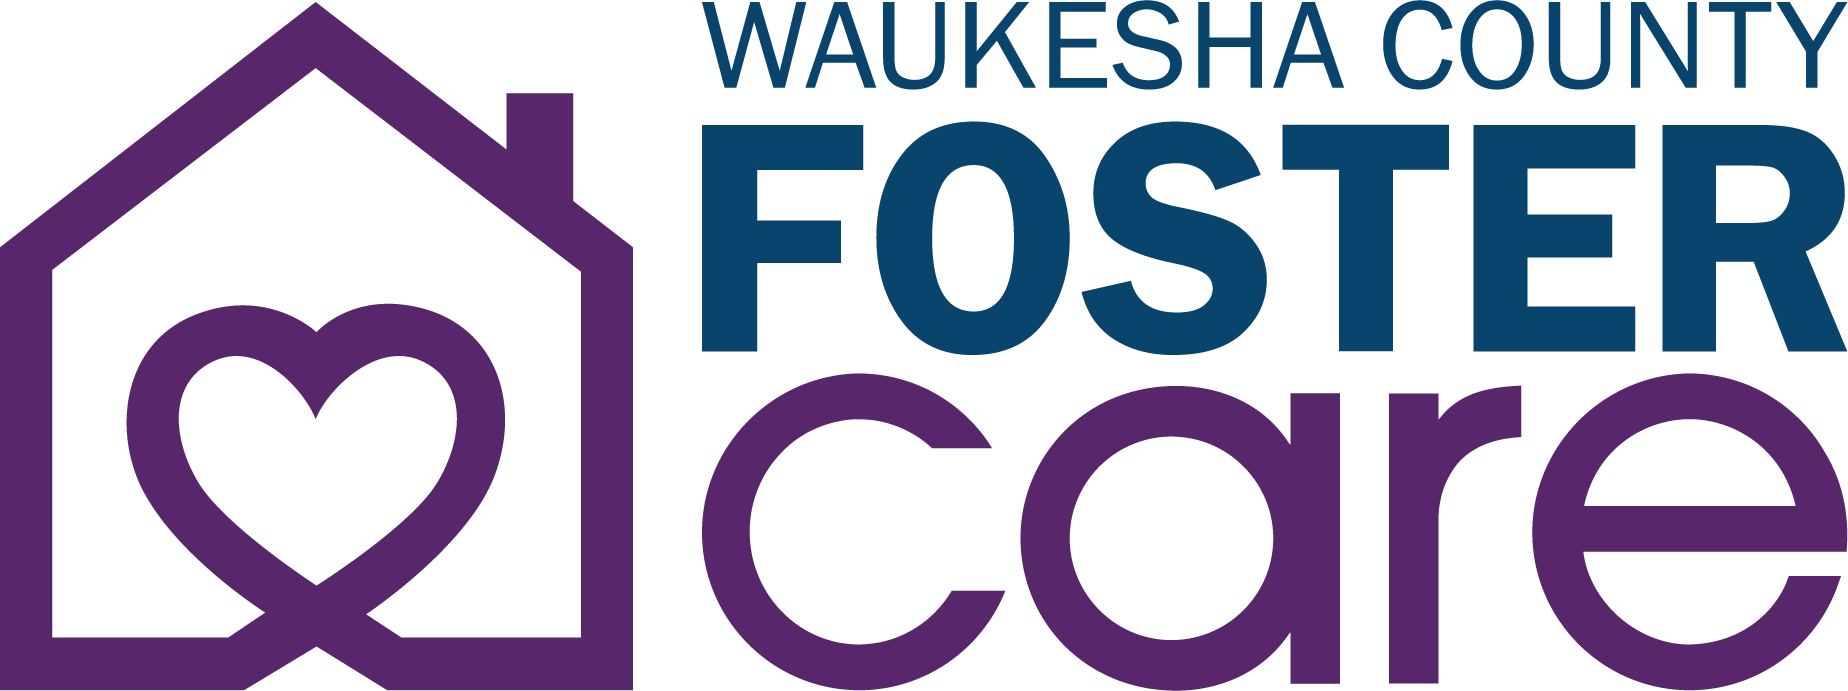 Waukesha County Foster Care Logo